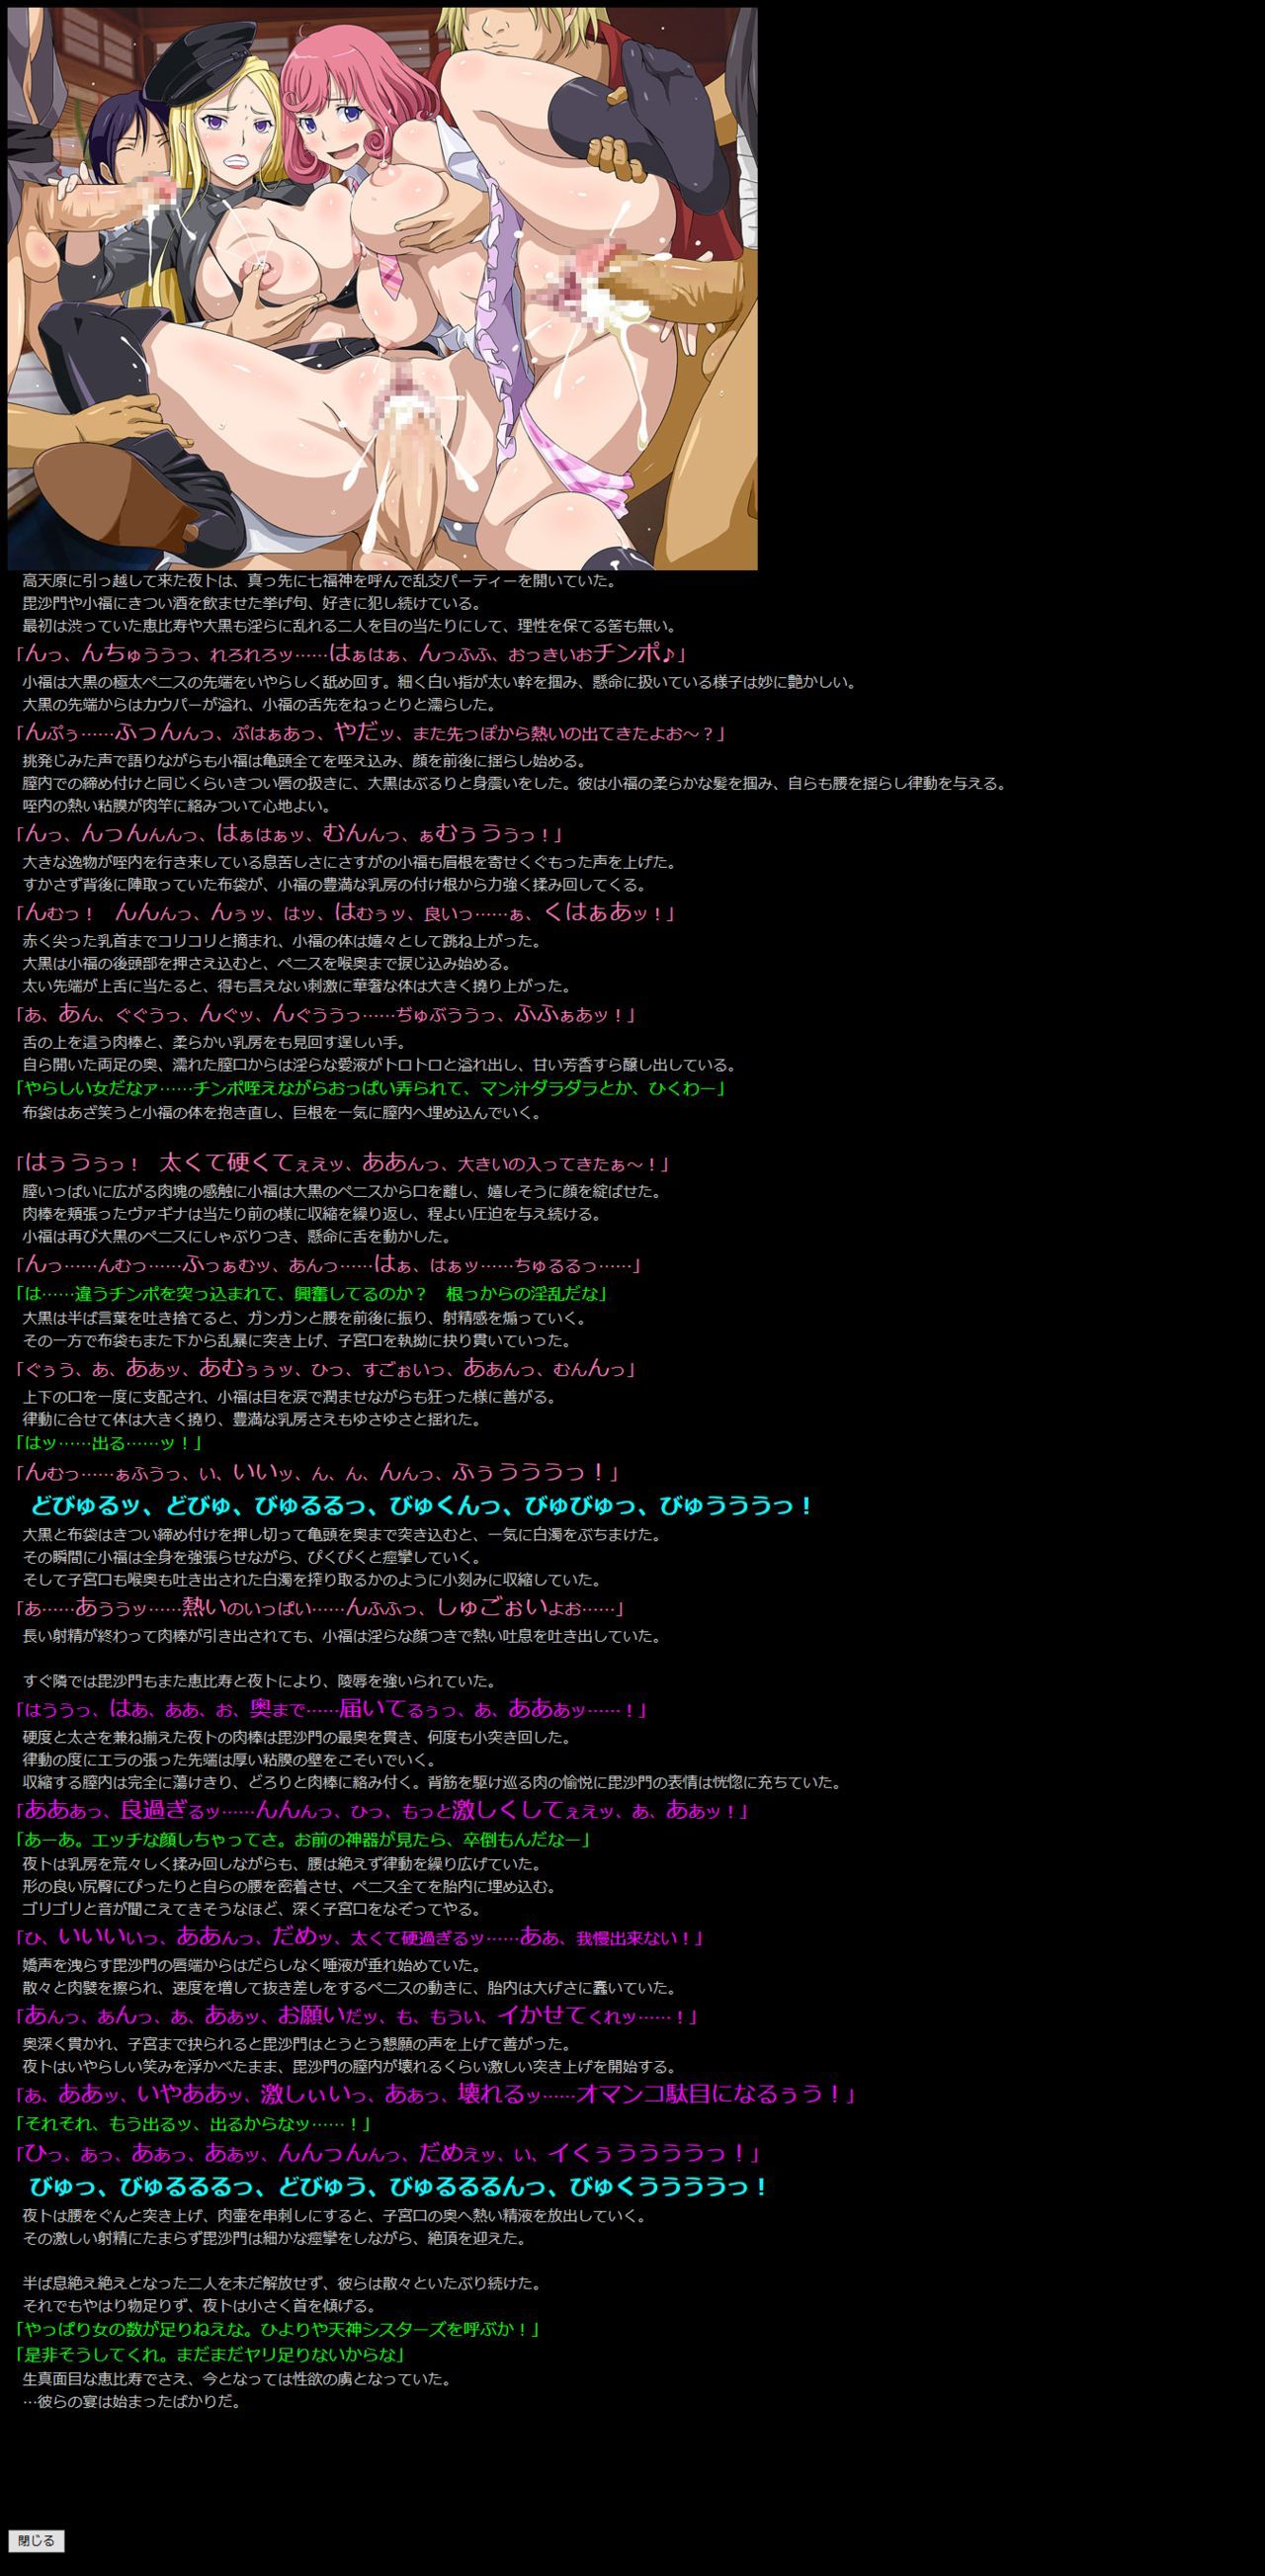 [LolitaChannel (Arigase Shinji)] Yuumei Chara Kannou Shousetsu CG Shuu No. 301!! Noragami HaaHaa CG Shuu (Noragami) [LolitaChannel (ありがせしんじ)] 有名キャラ官能小説CG集 第301弾!! ノ○ガミはぁはぁCG集 (ノラガミ) 3